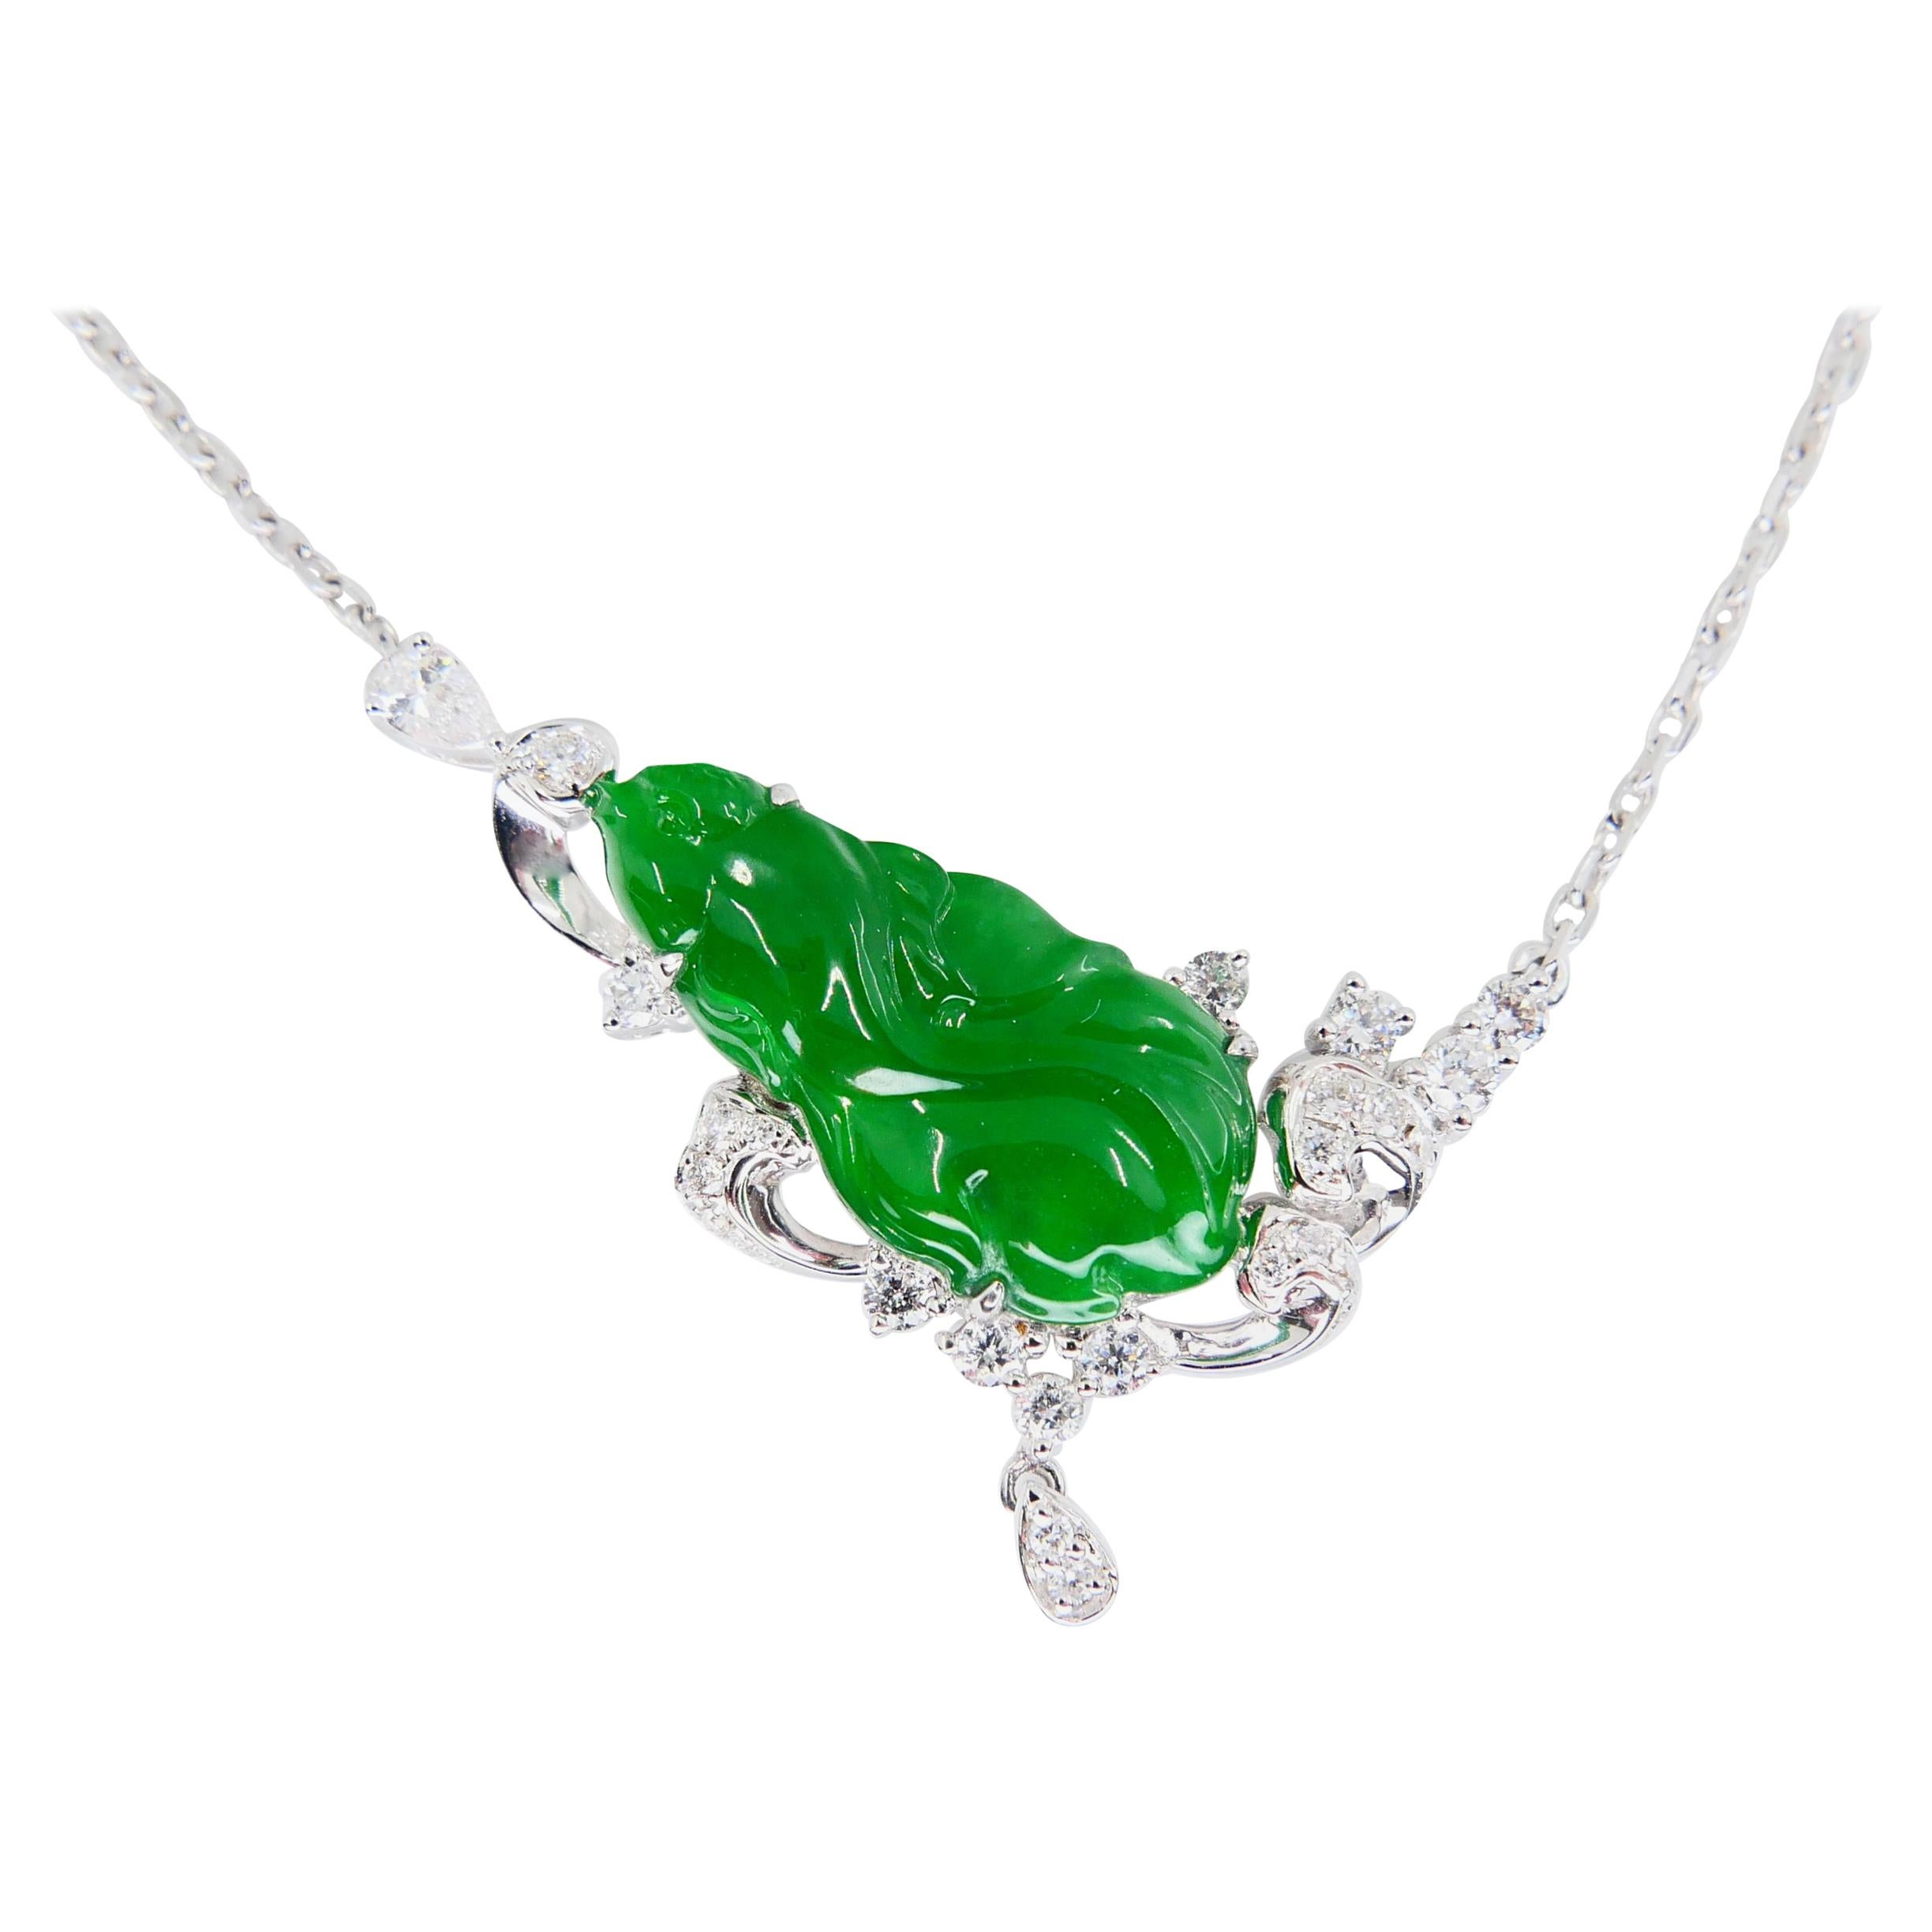 Certified Type A Jadeite Jade Diamond Pendant Drop Necklace, Imperial Green